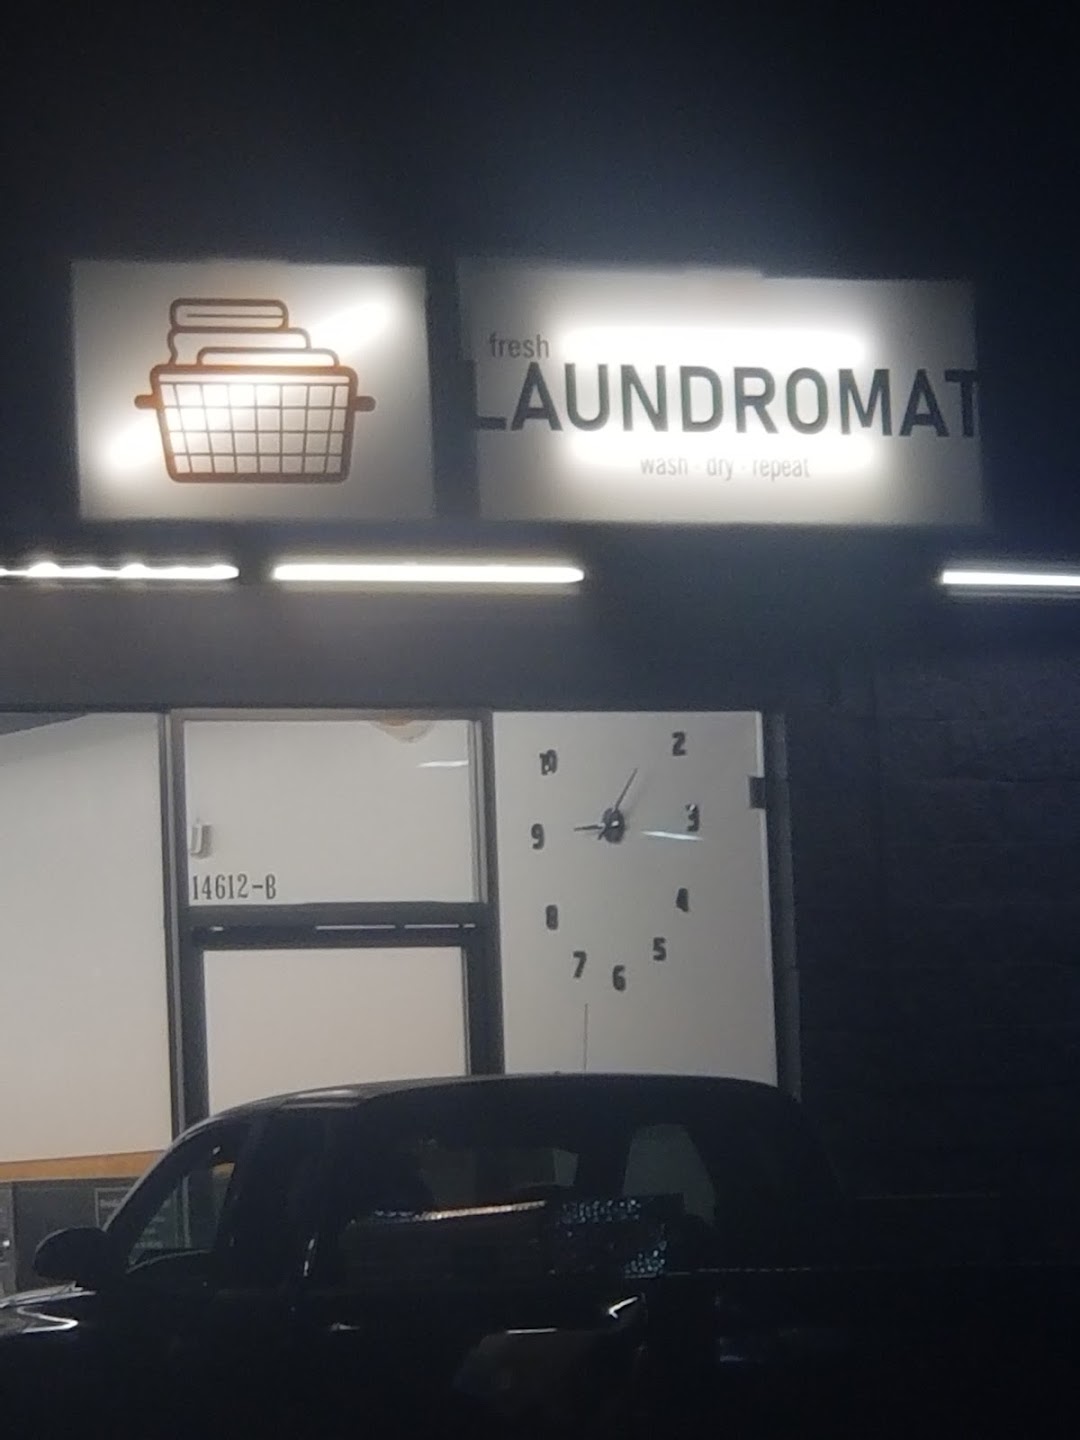 Laundromat Y